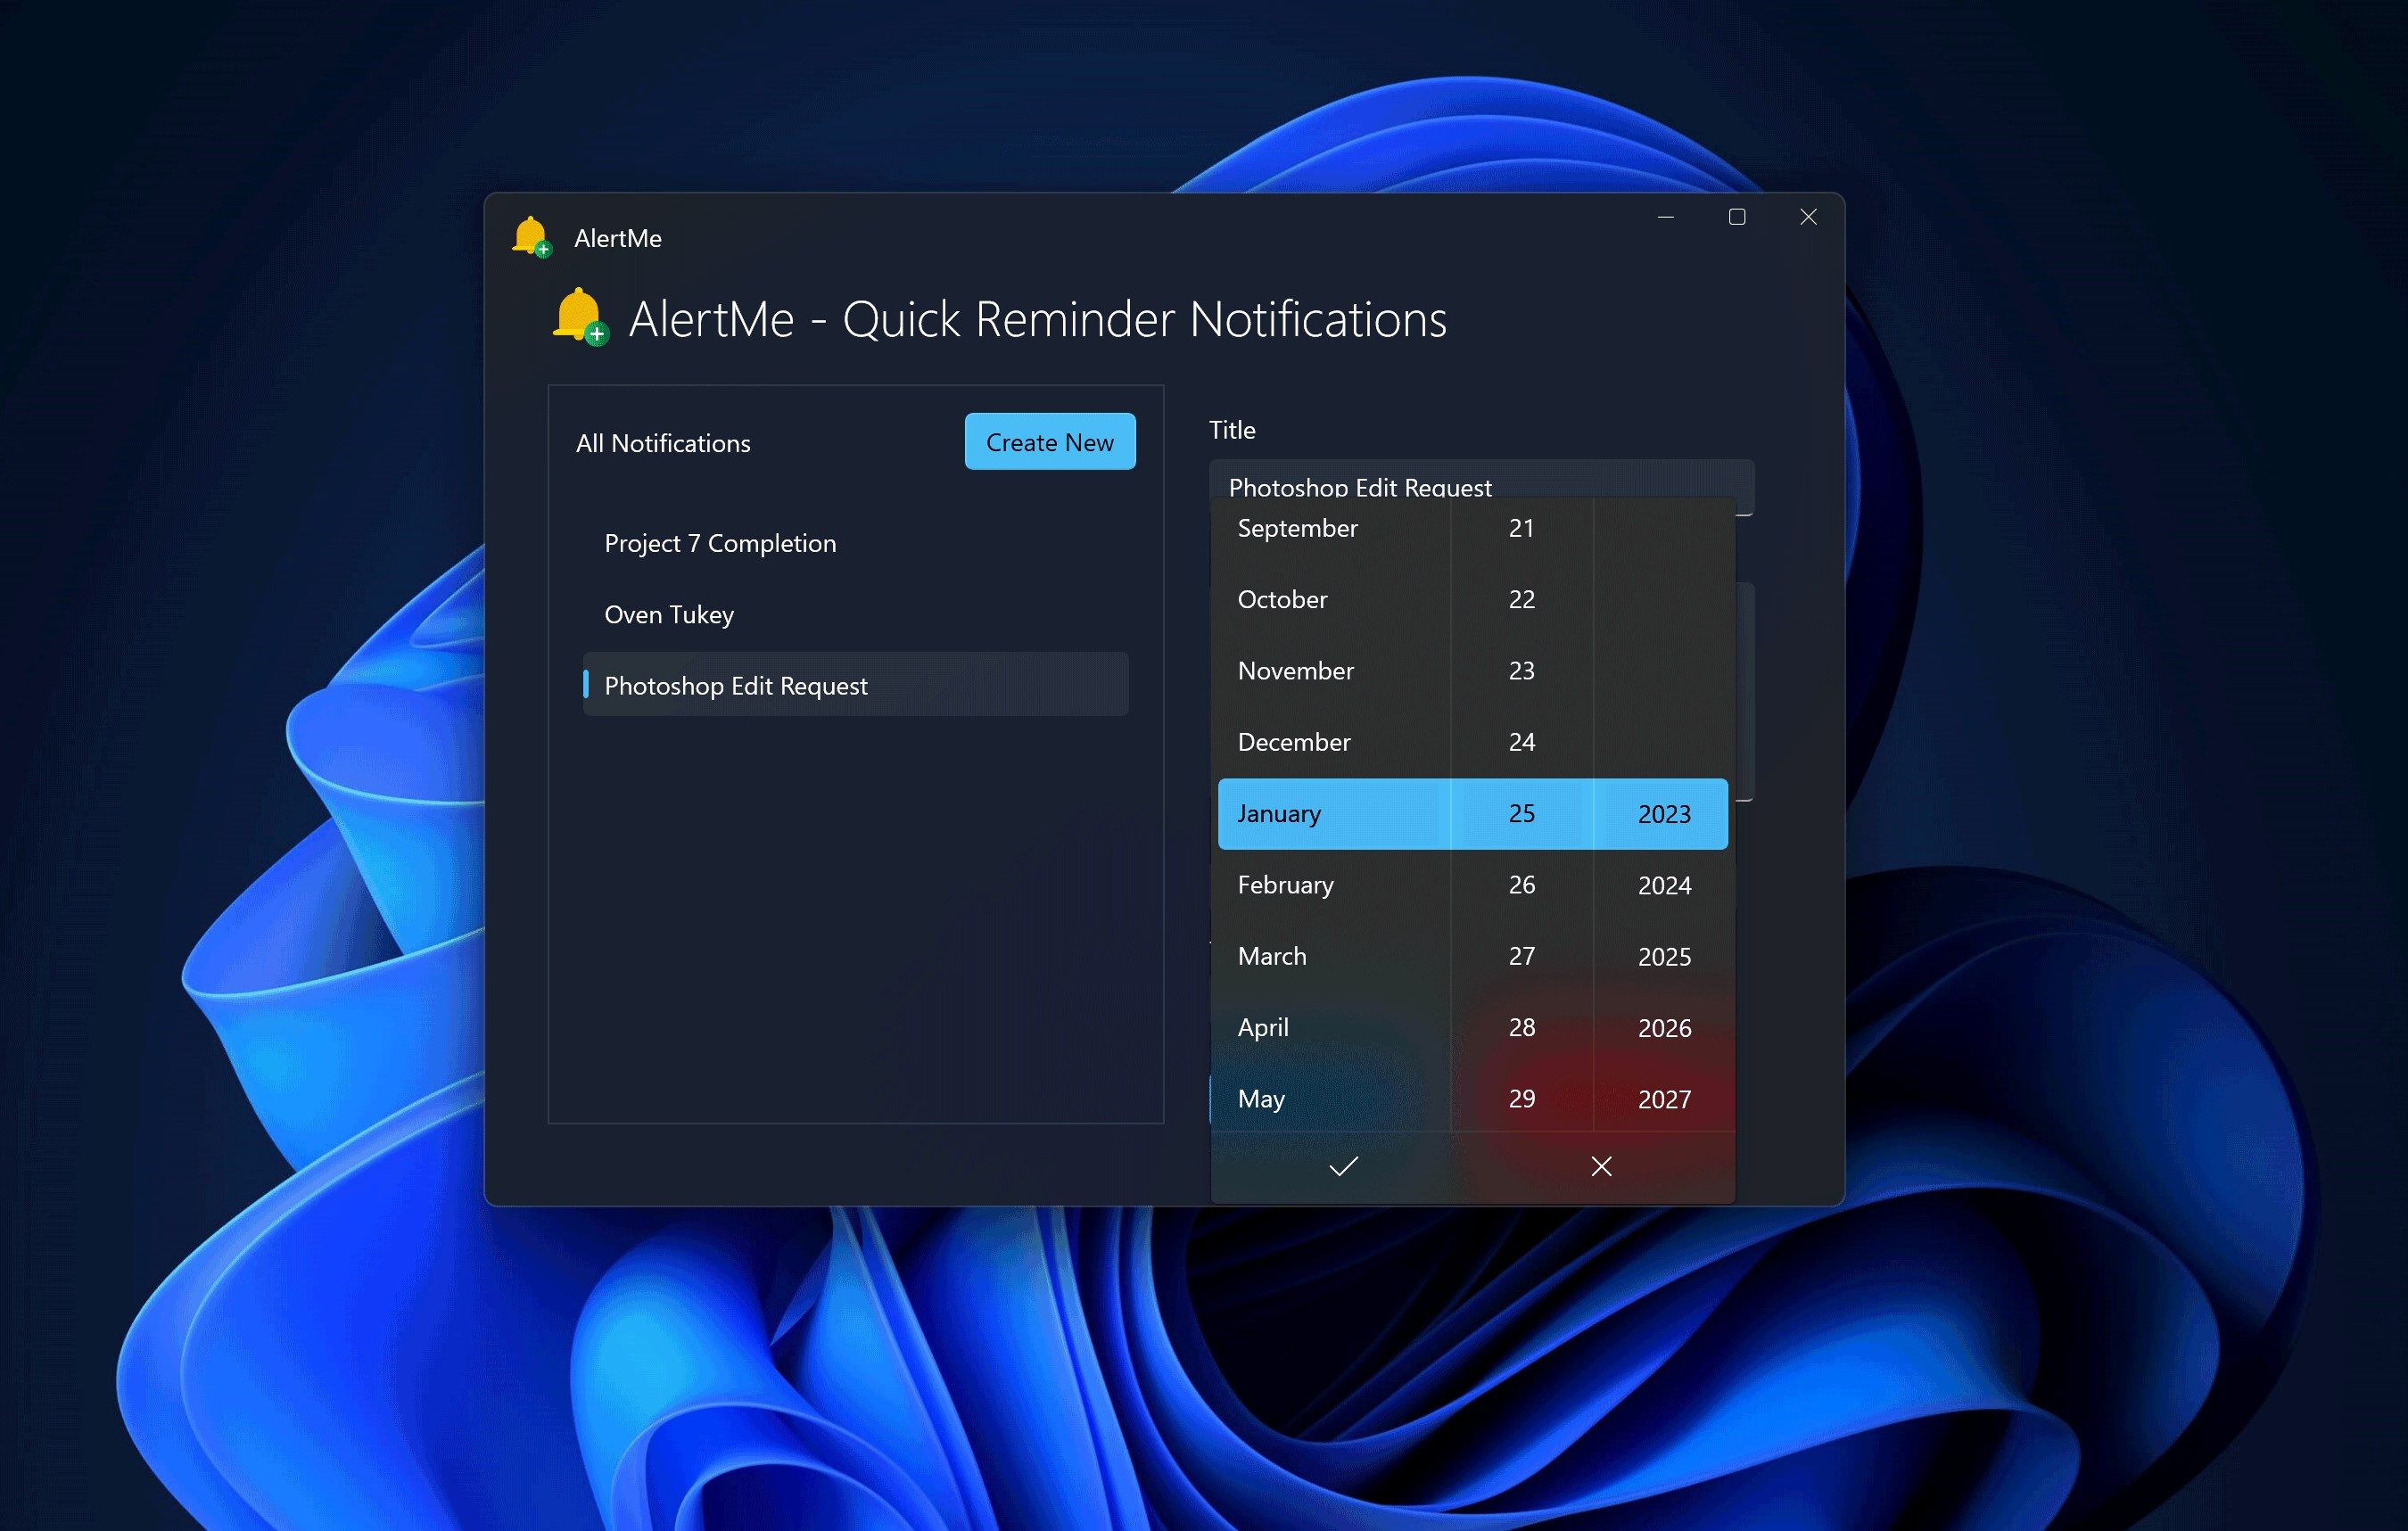 AlertMe - Quick Reminder Notifications